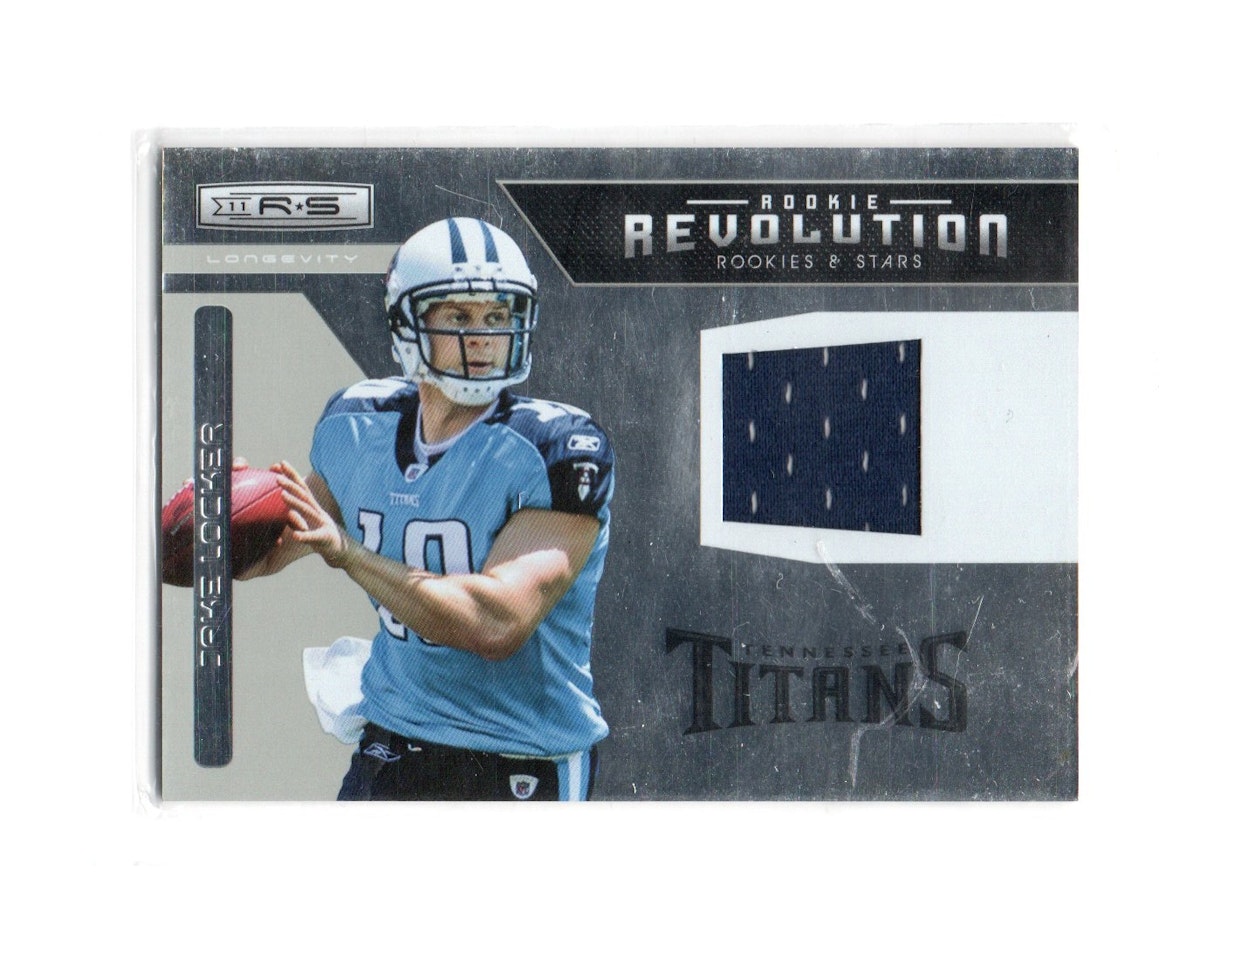 2011 Rookies and Stars Longevity Rookie Revolution Materials #14 Jake Locker (30-164x4-NFLTITANS)